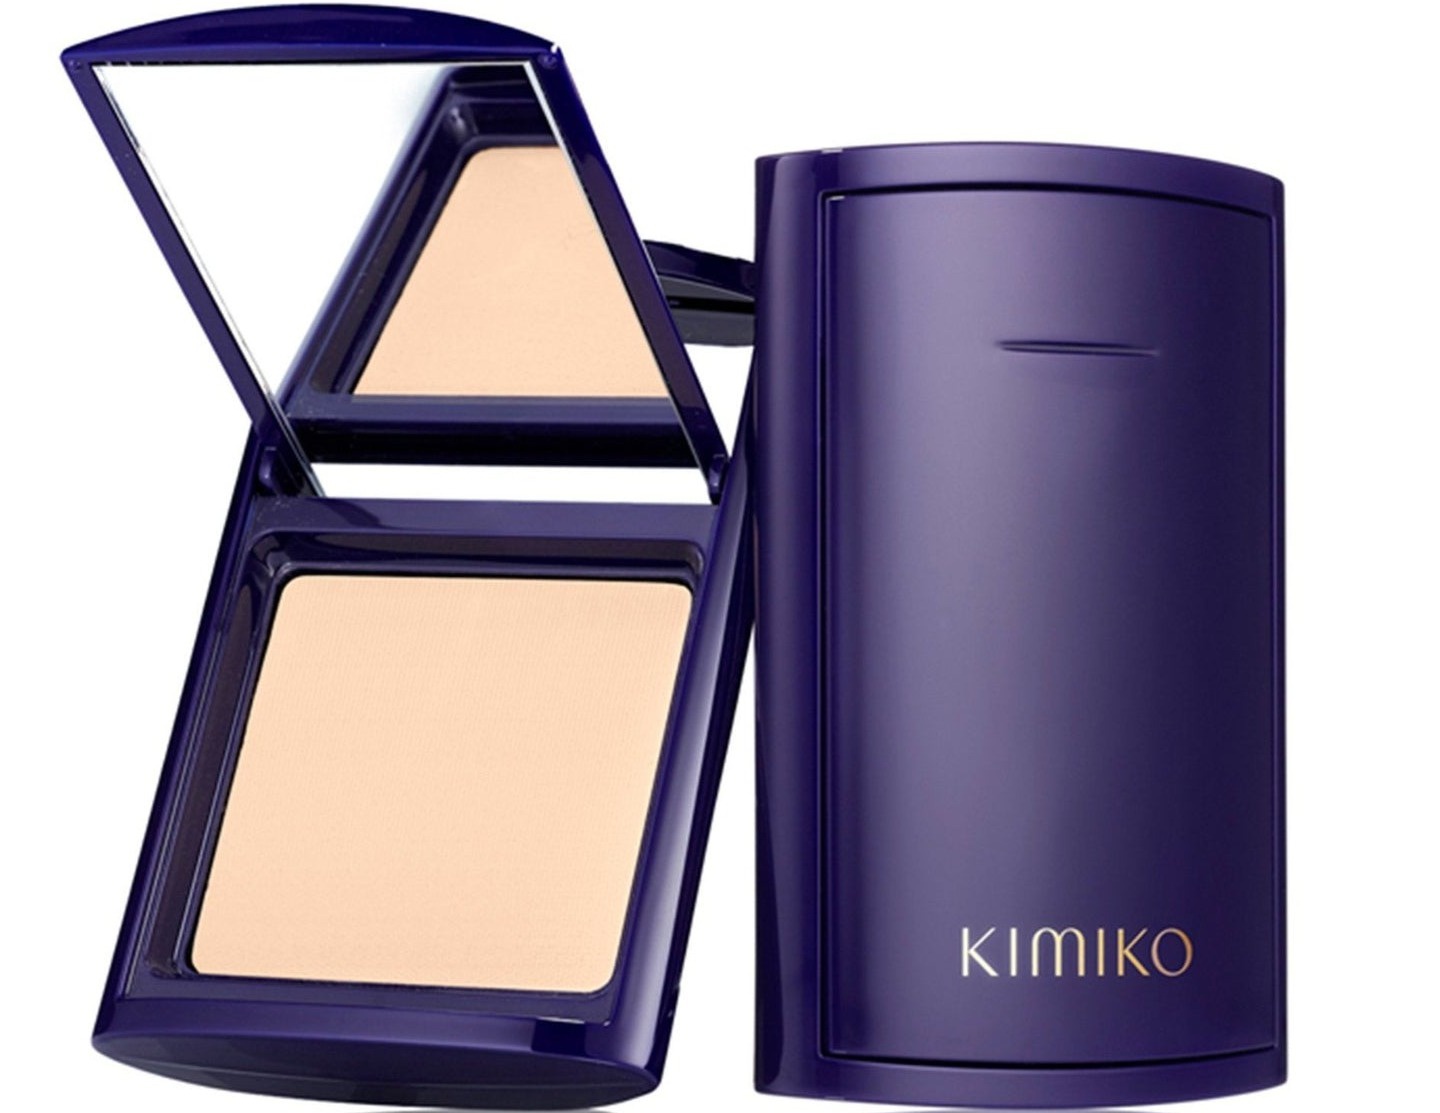 Kimiko Beauty Lifting Pressed Powder